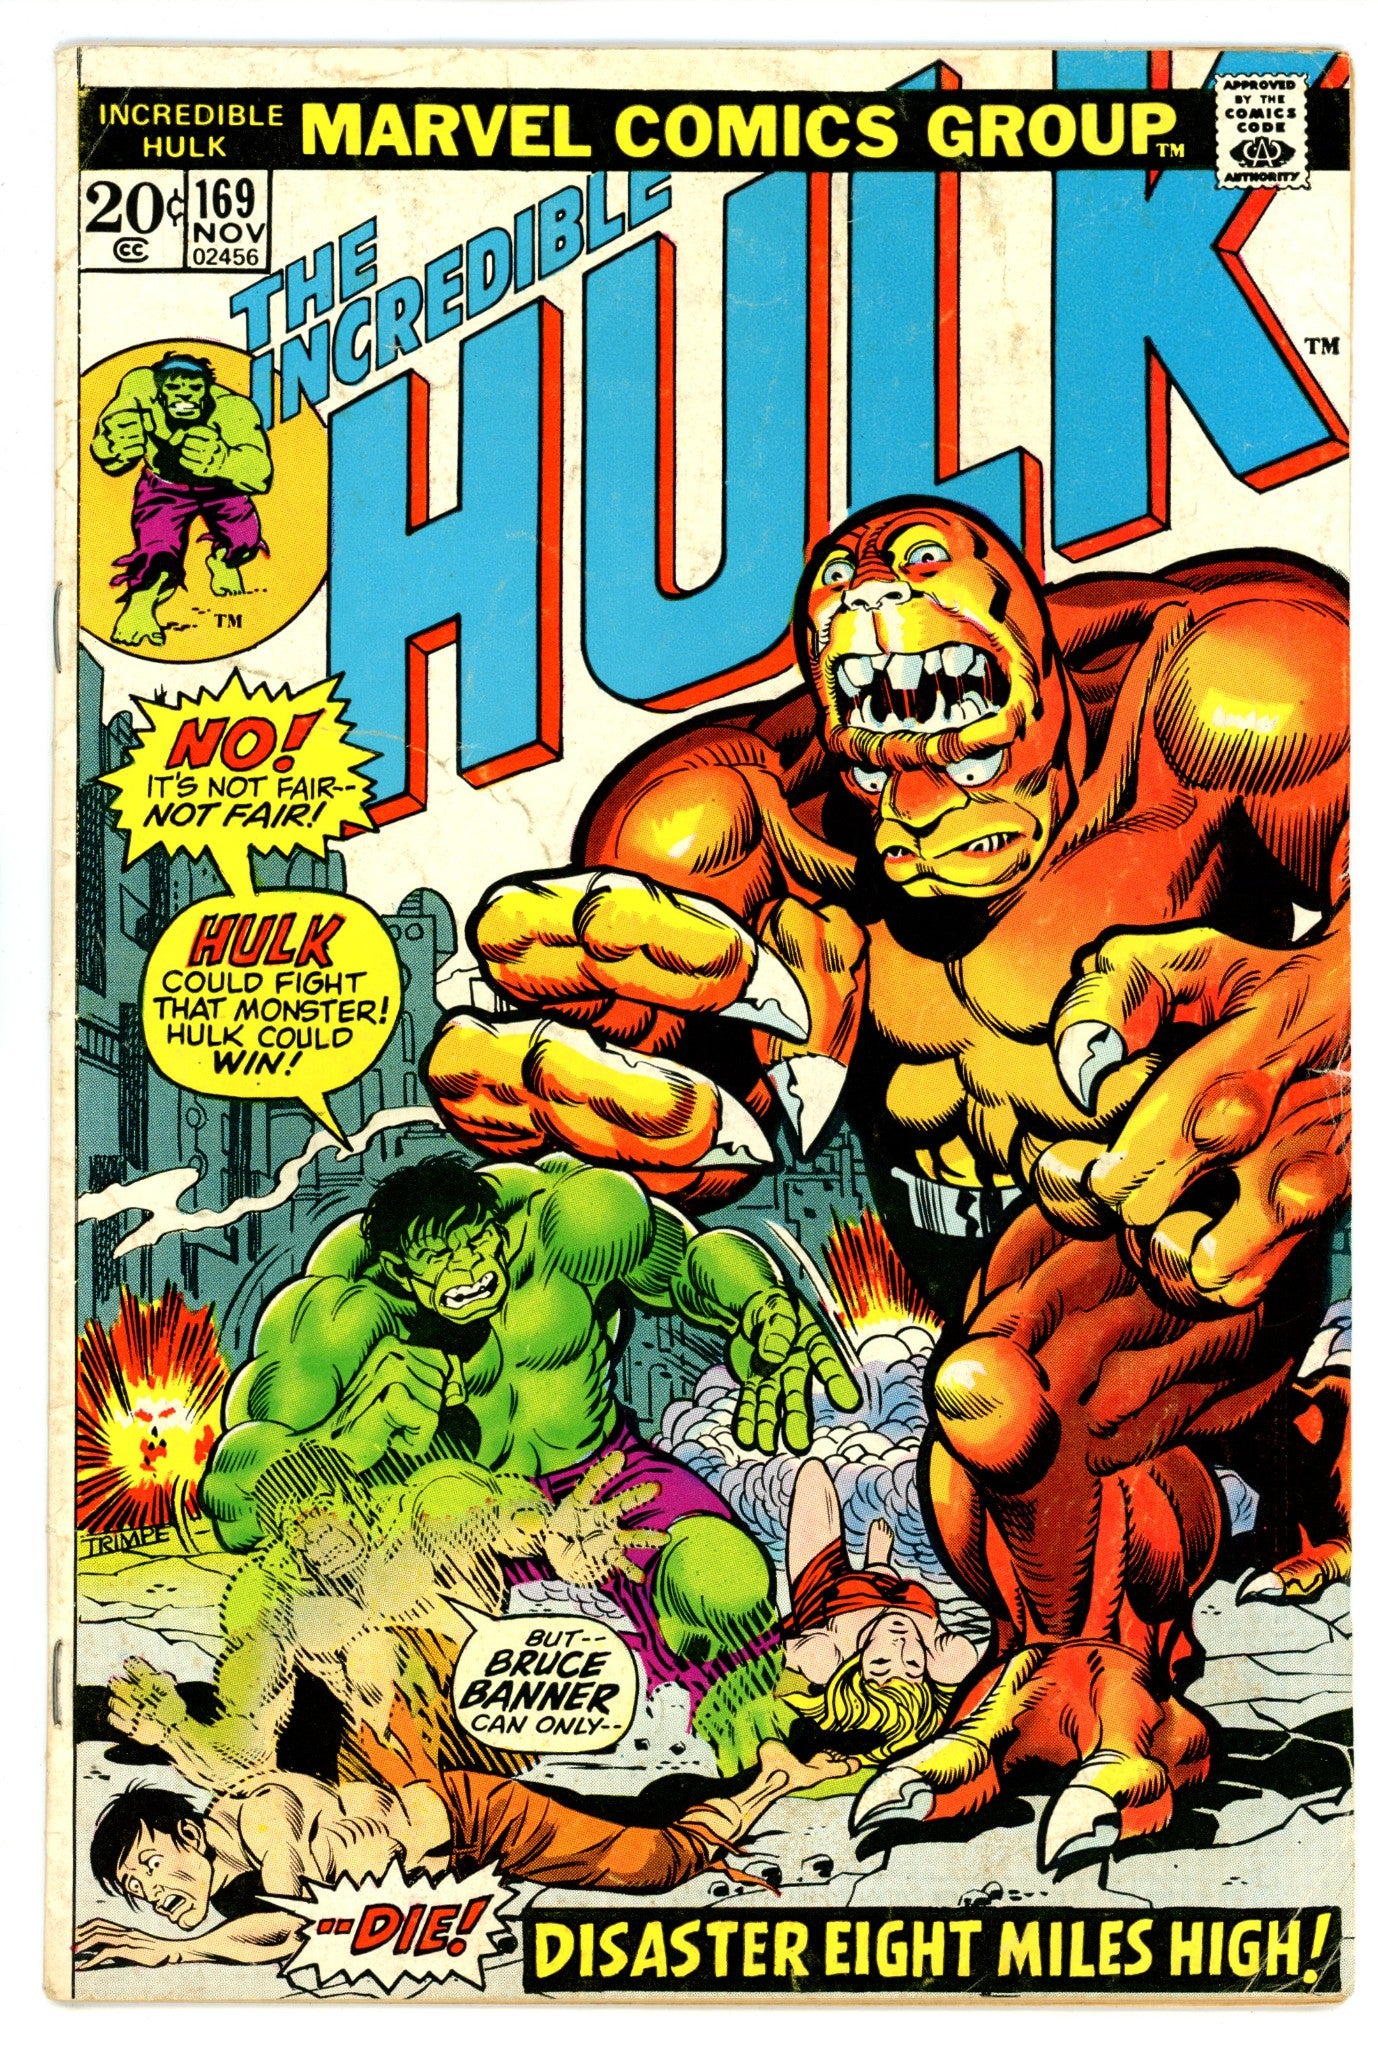 The Incredible Hulk Vol 1 169 VG (4.0) (1973) 